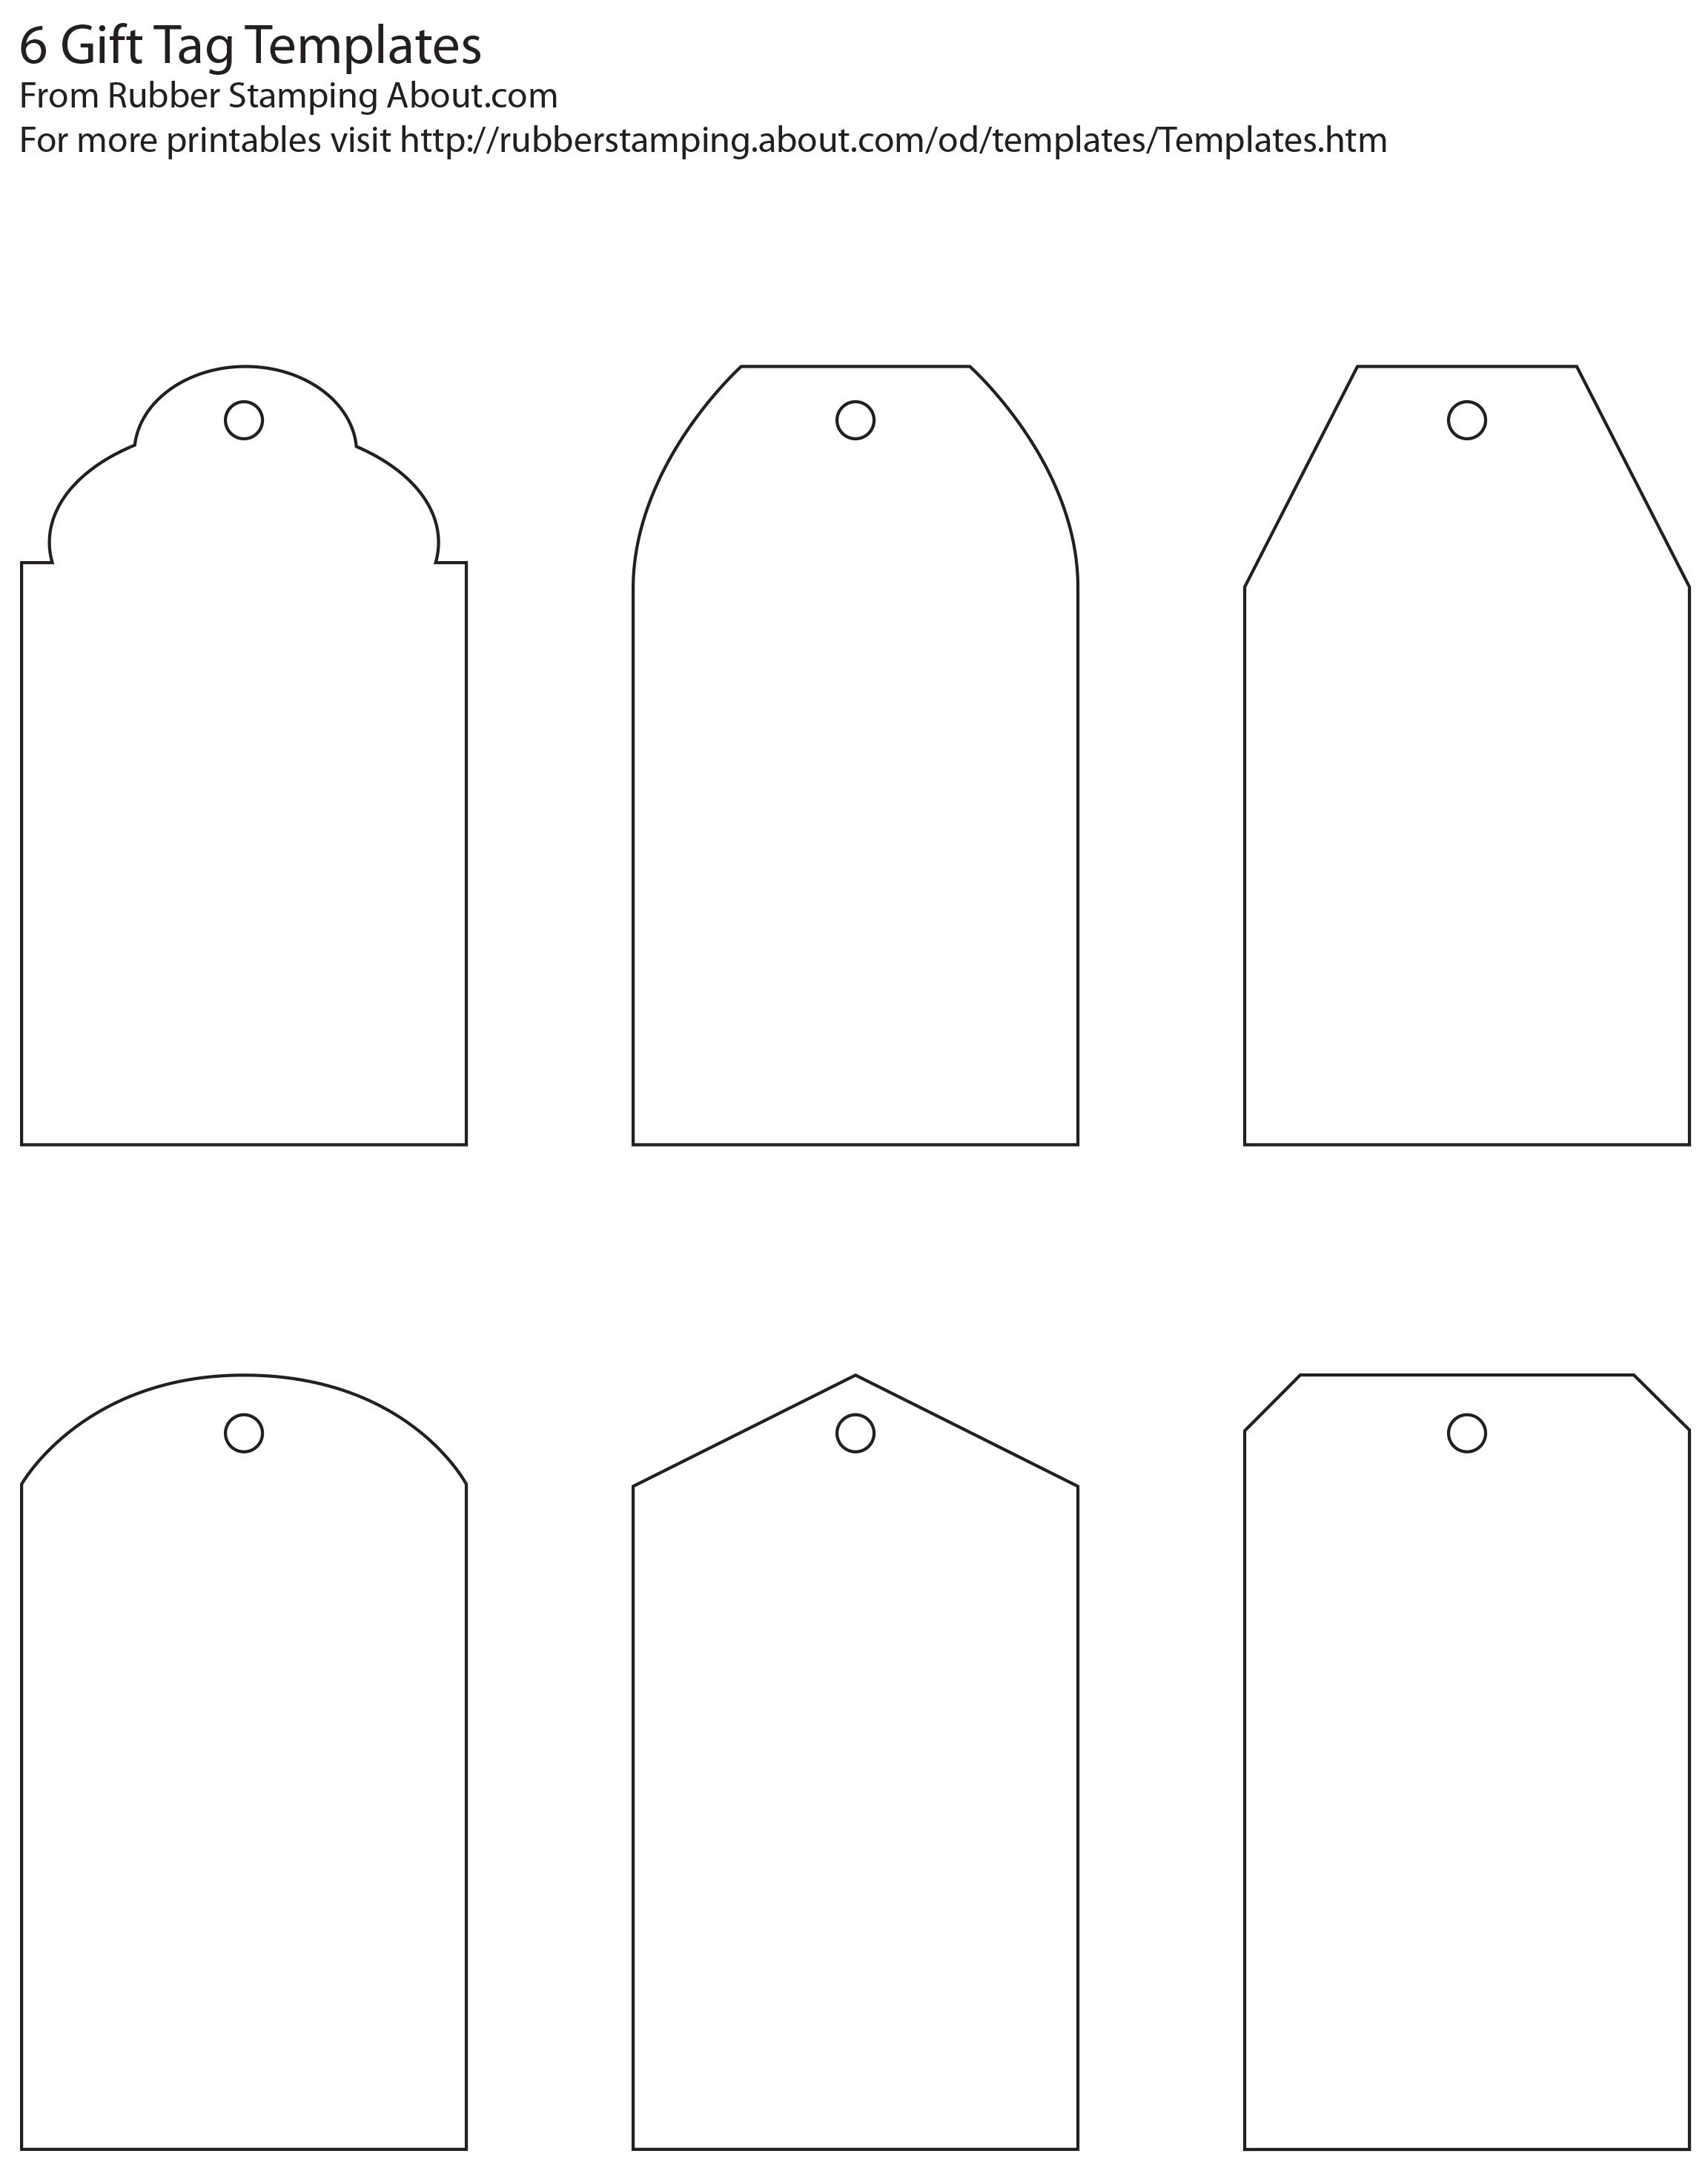 Free And Whimsical Printable Gift Tag Templates | Great Idea - Free Printable Gift Bag Tags